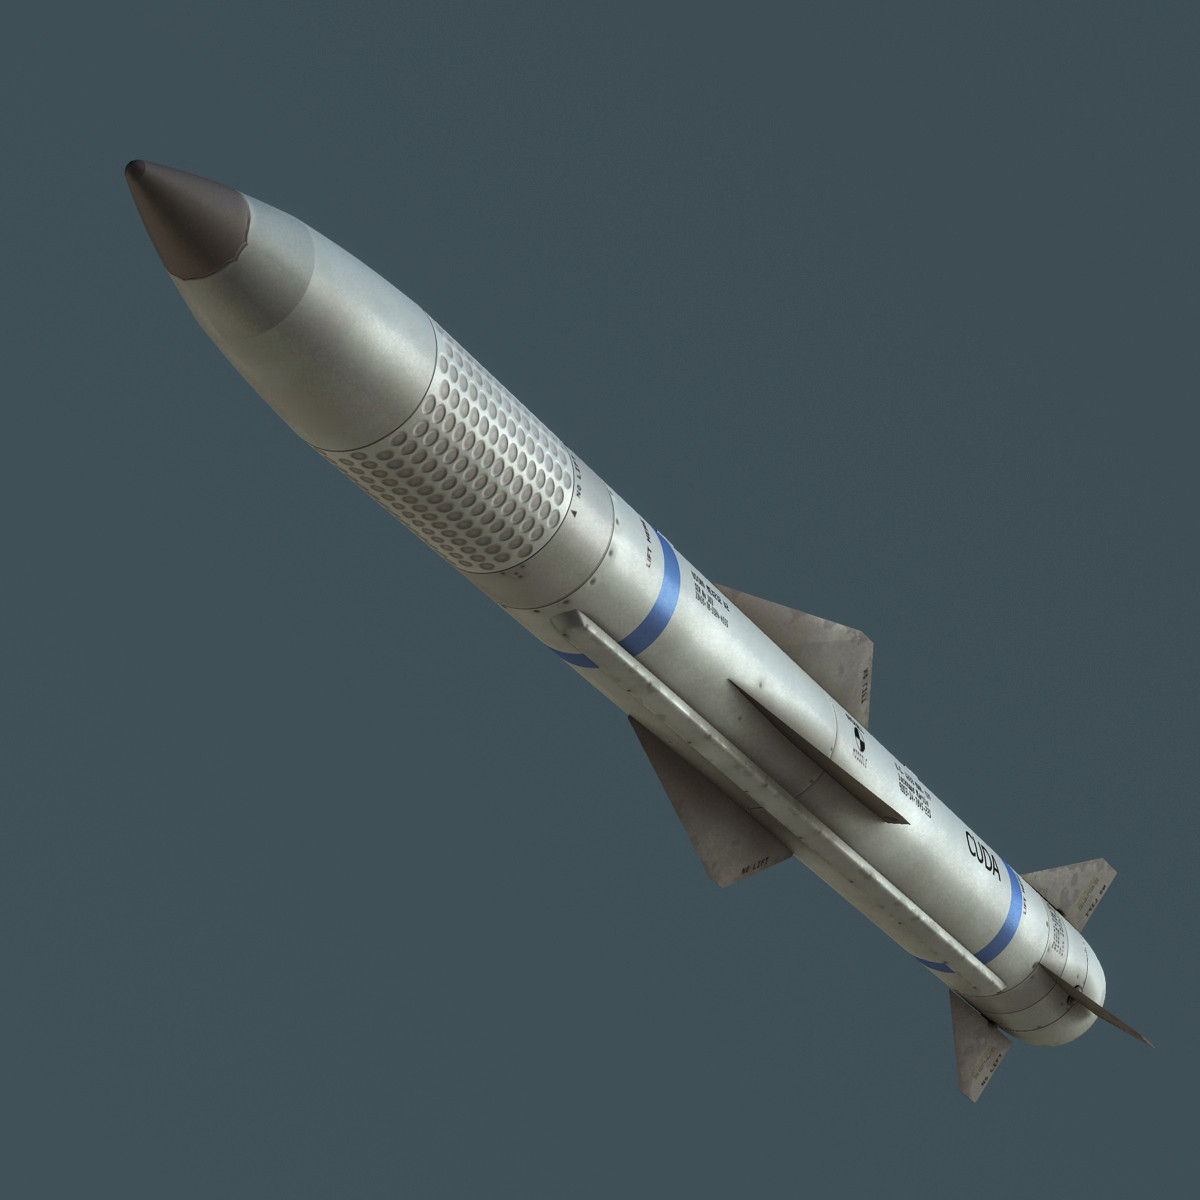 О создании Lockheed Martin многоцелевой ракеты CUDA